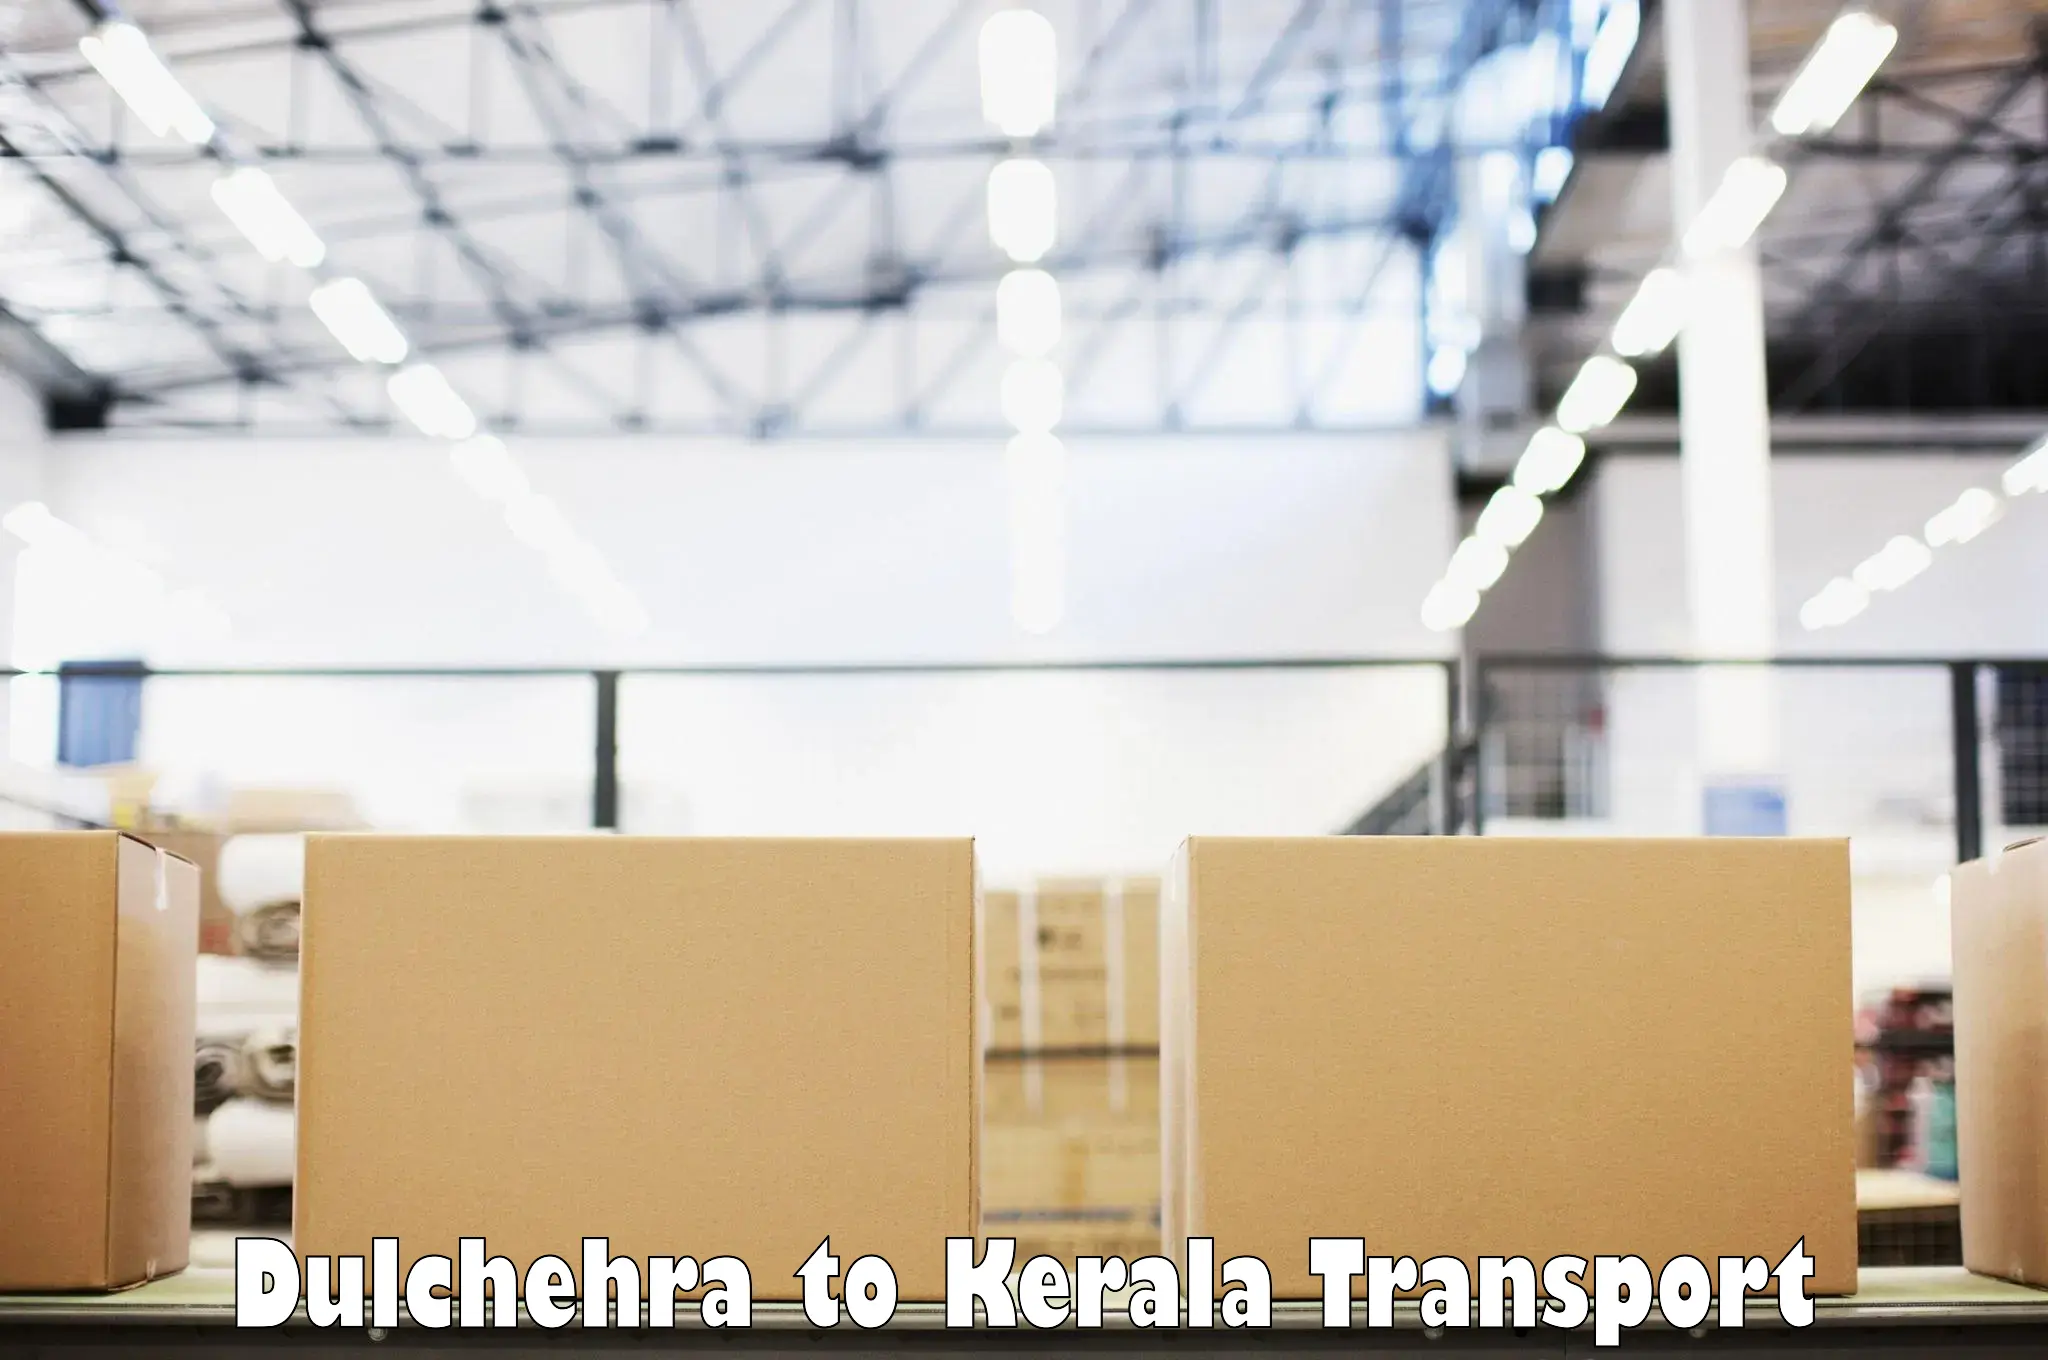 Land transport services Dulchehra to Malappuram